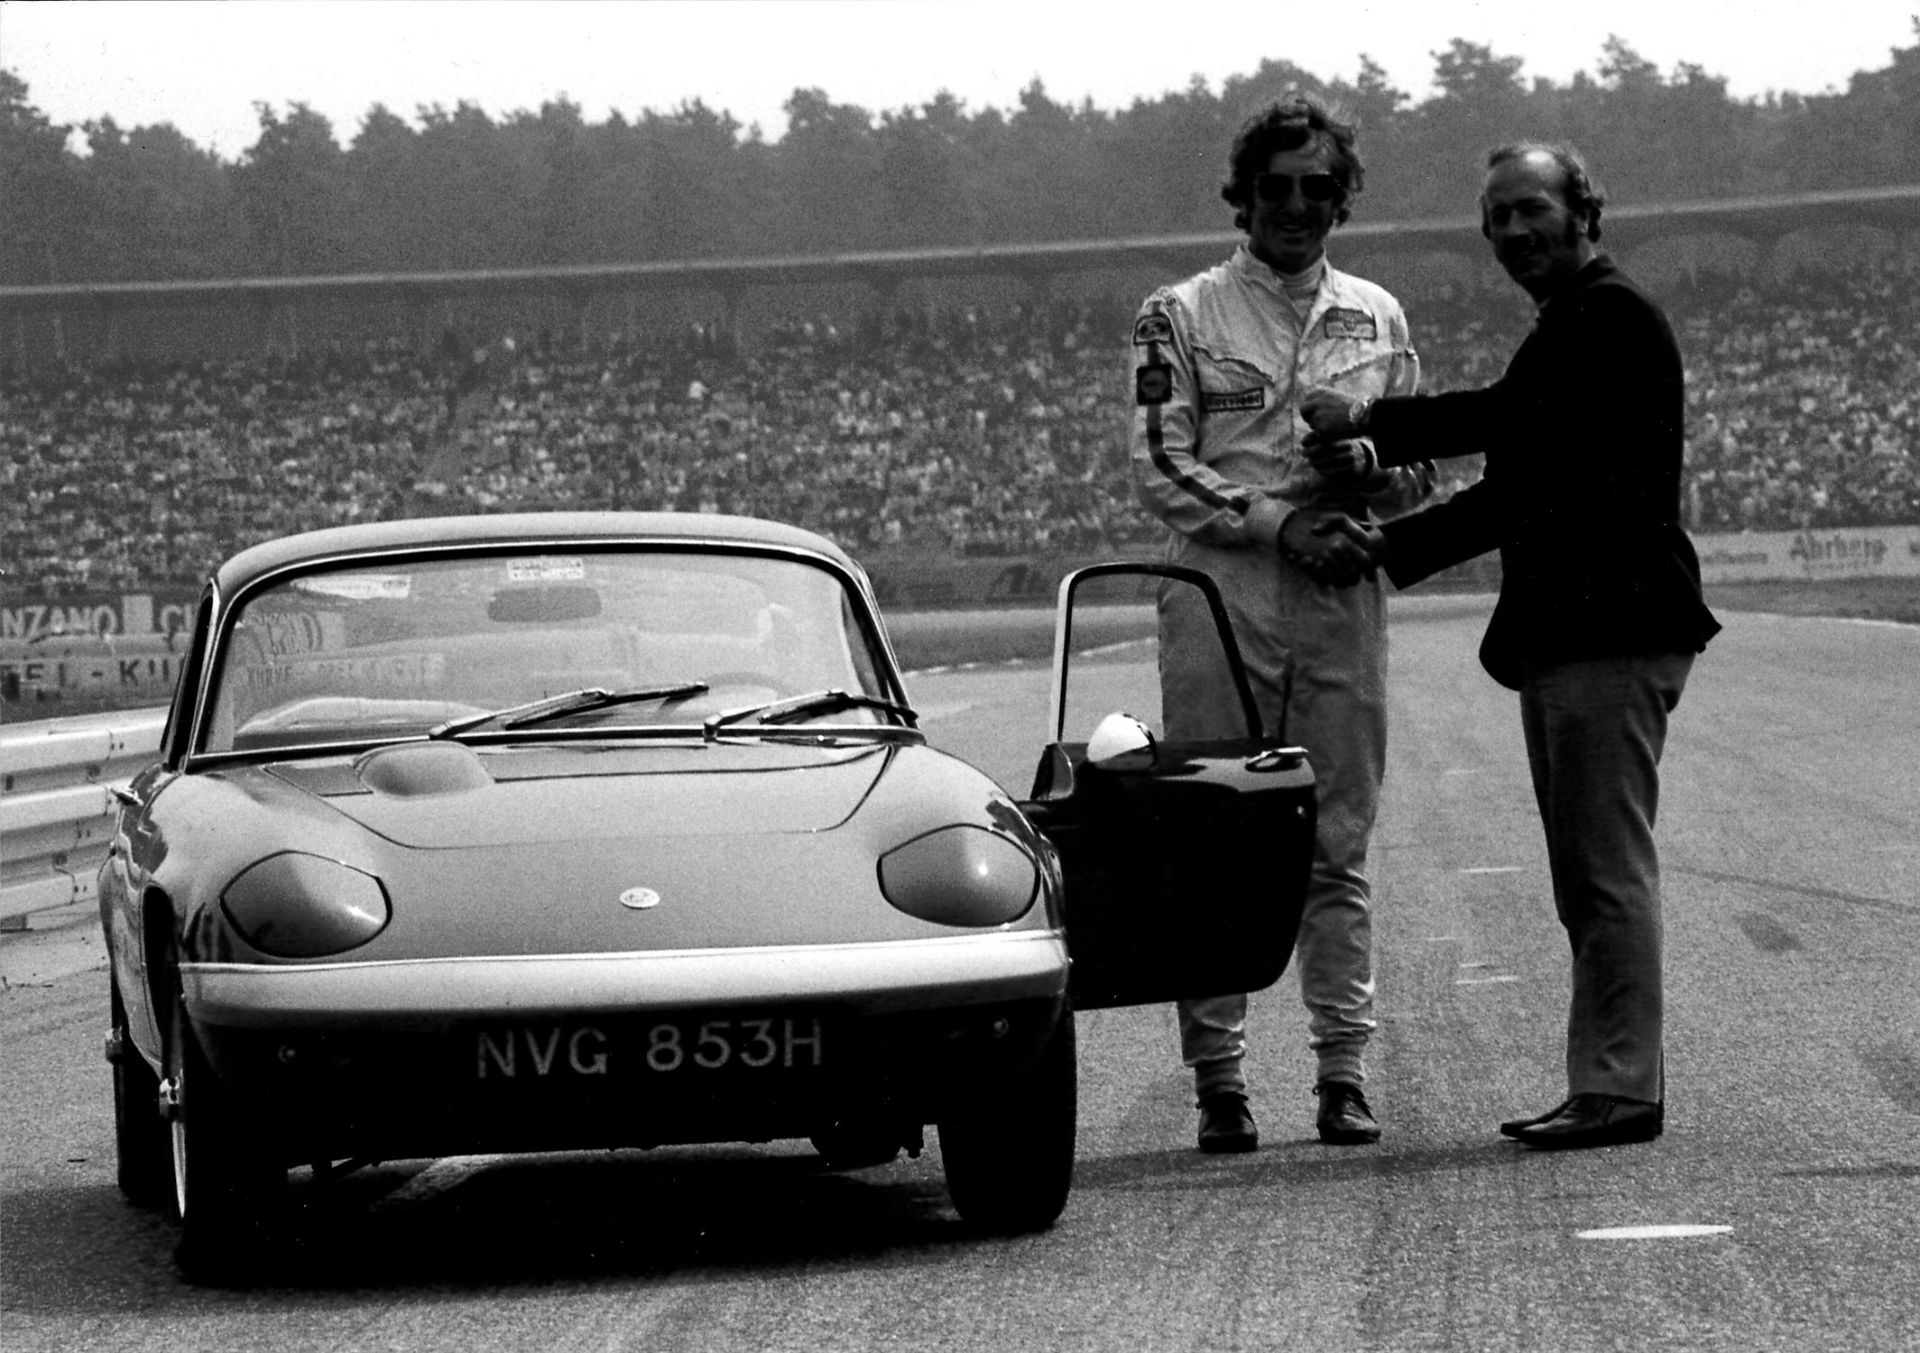 1969 Lotus Elan S4 FHC - 'Jochen Rindt' - Image 5 of 10